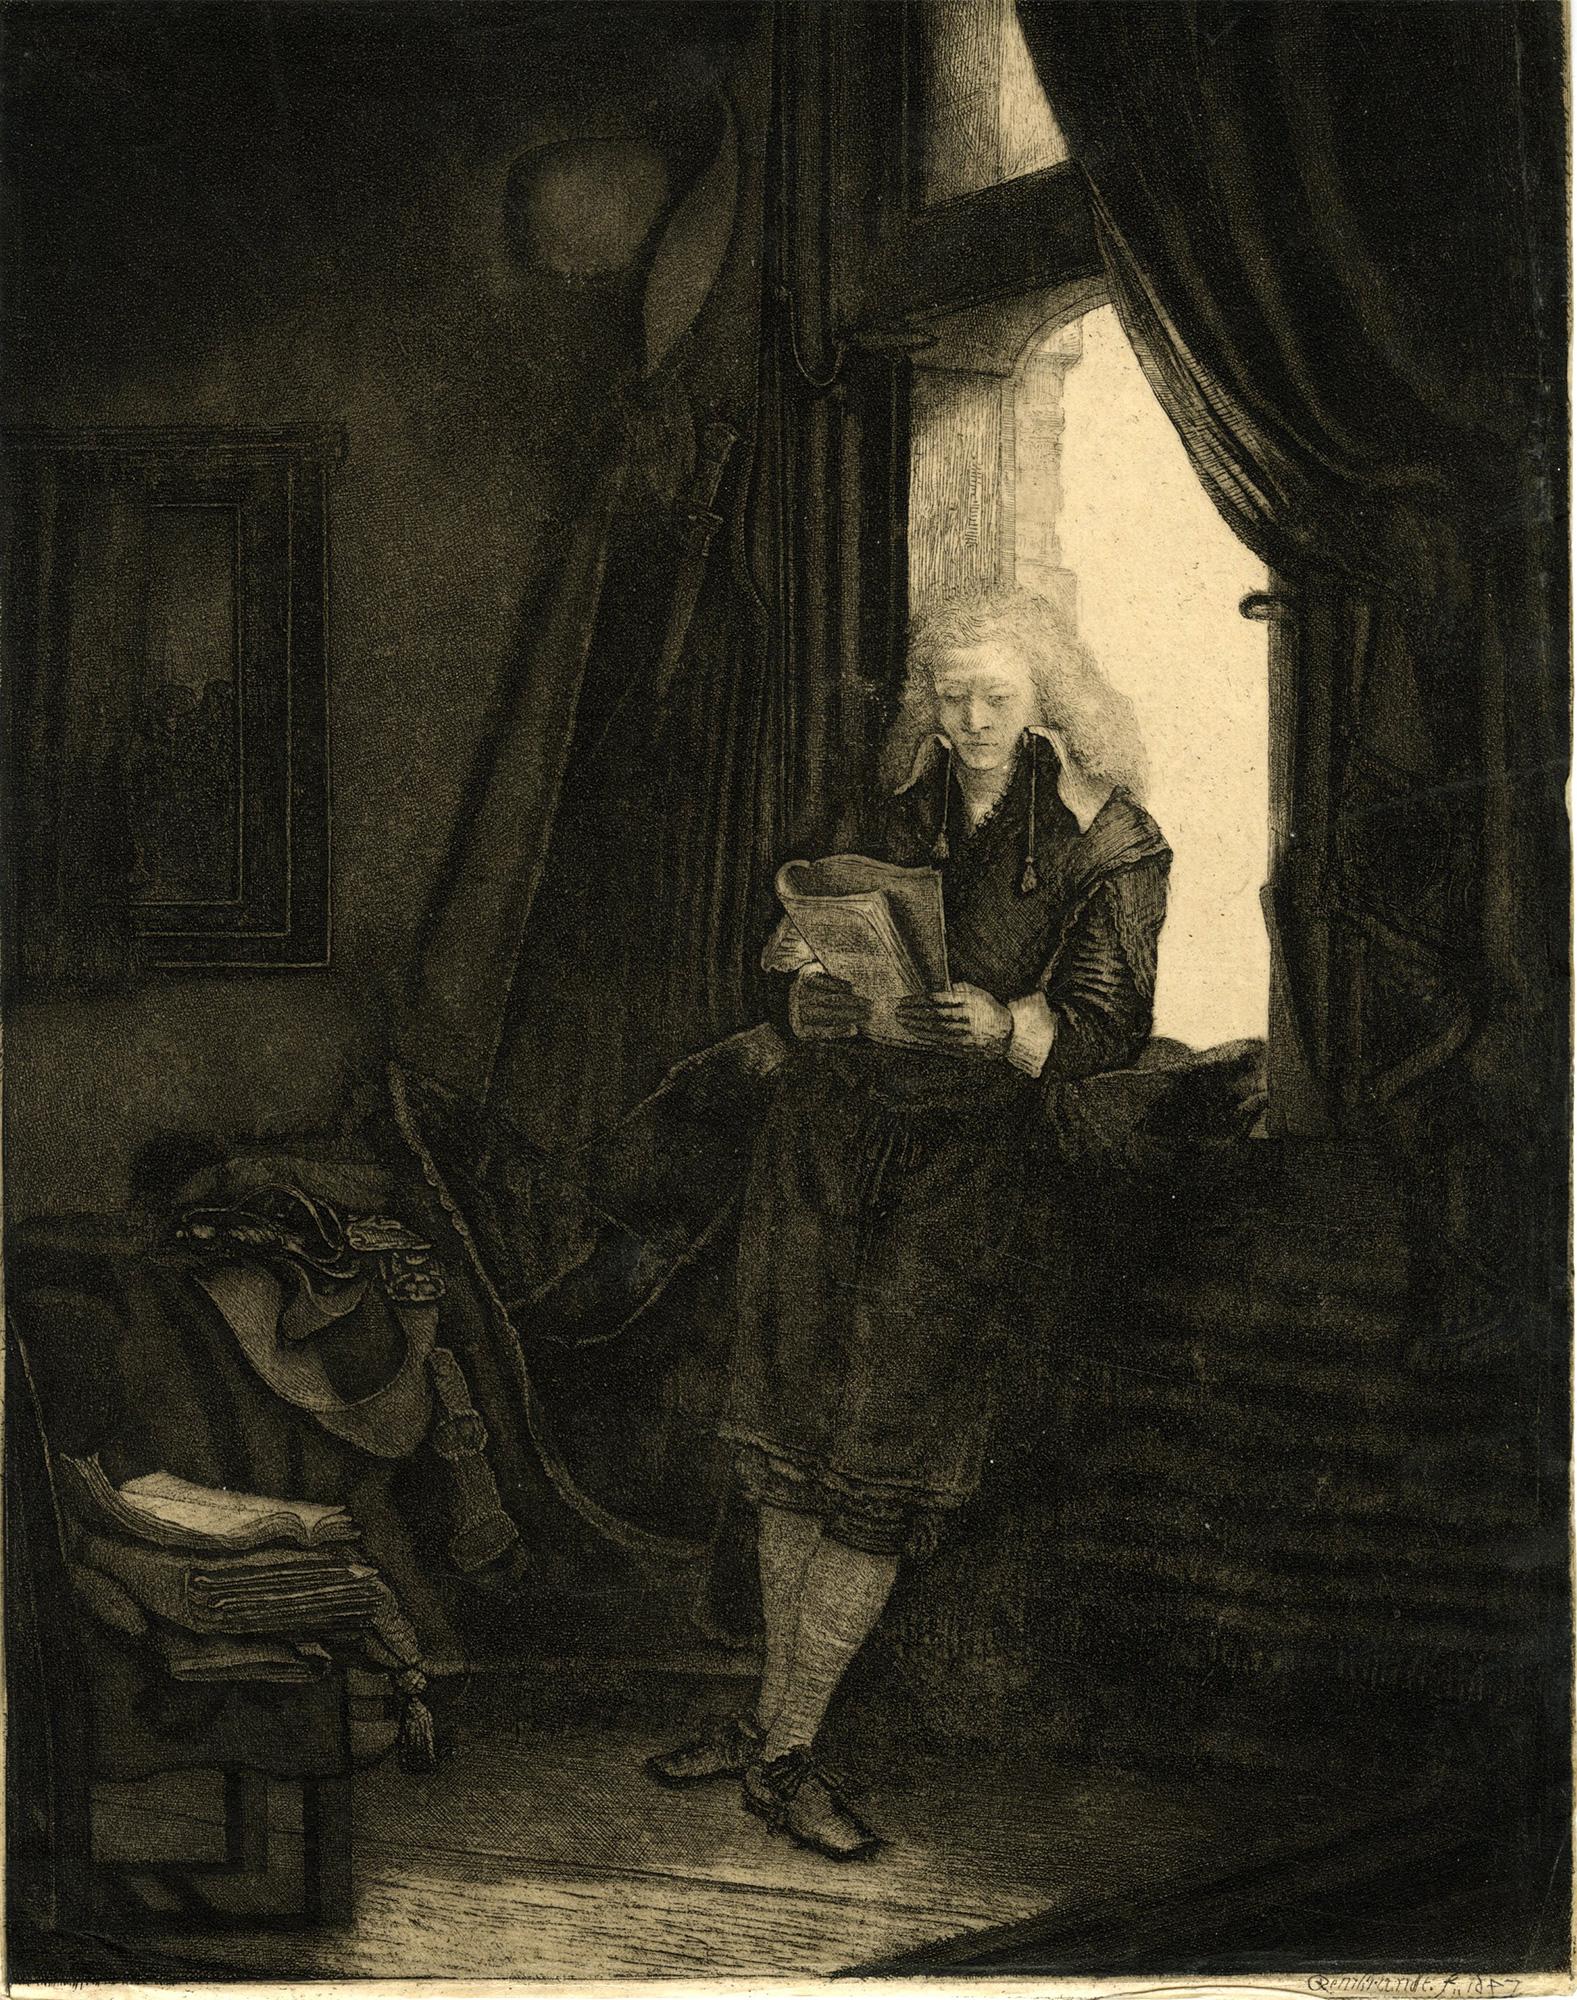 (After) Rembrandt van Rijn  Figurative Print - Jan Six by Pierre François Basan, after Rembrandt